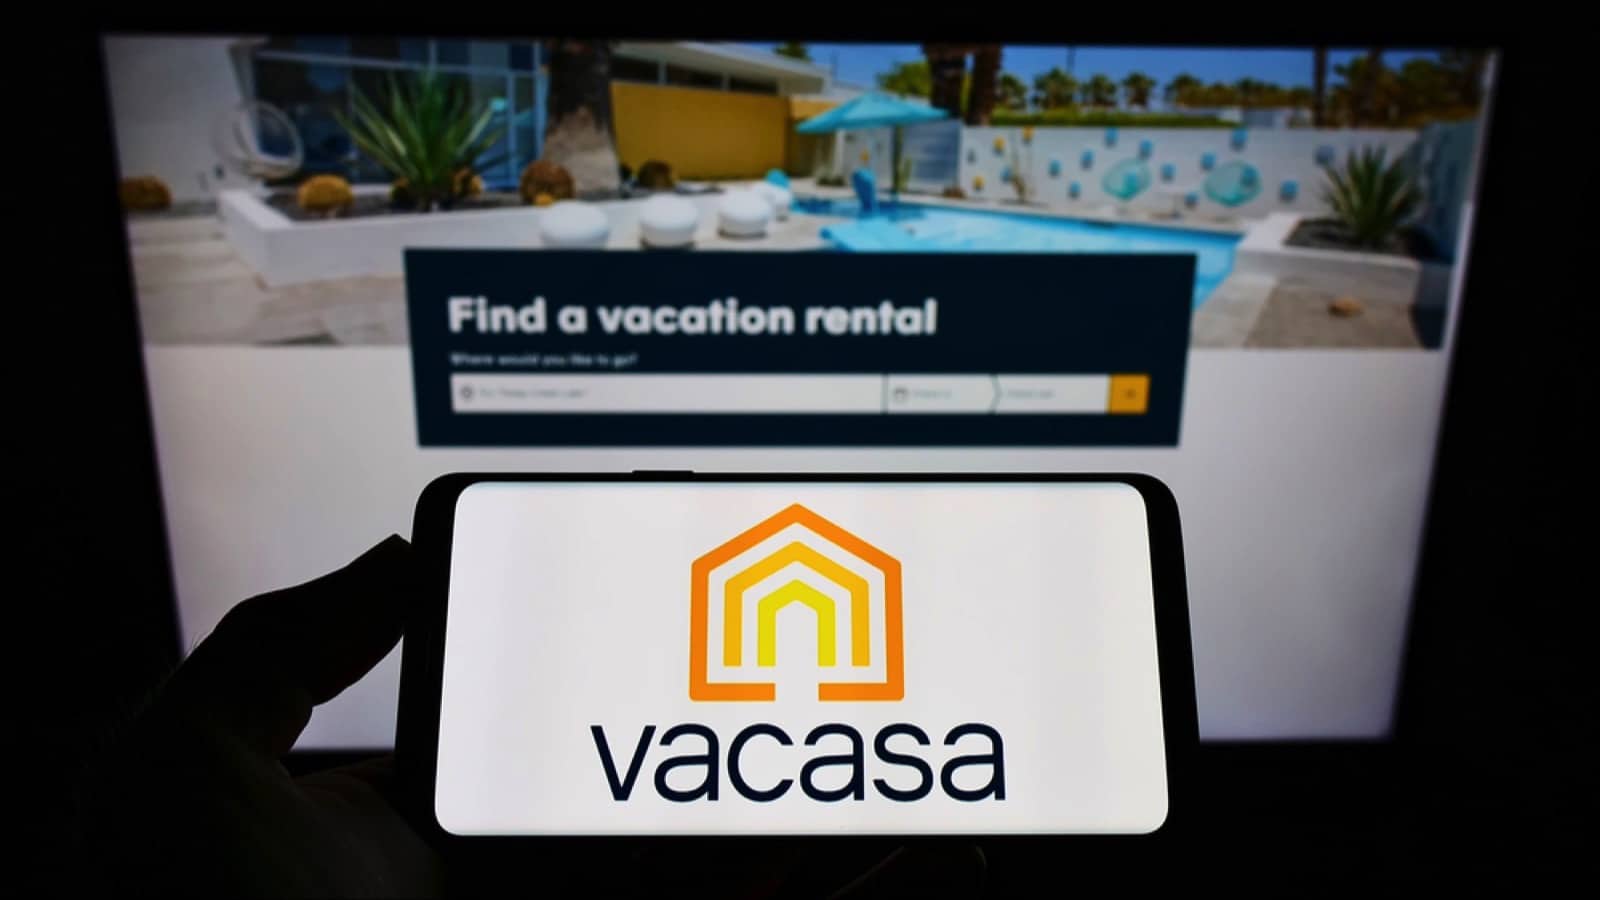 Vacation rental companies